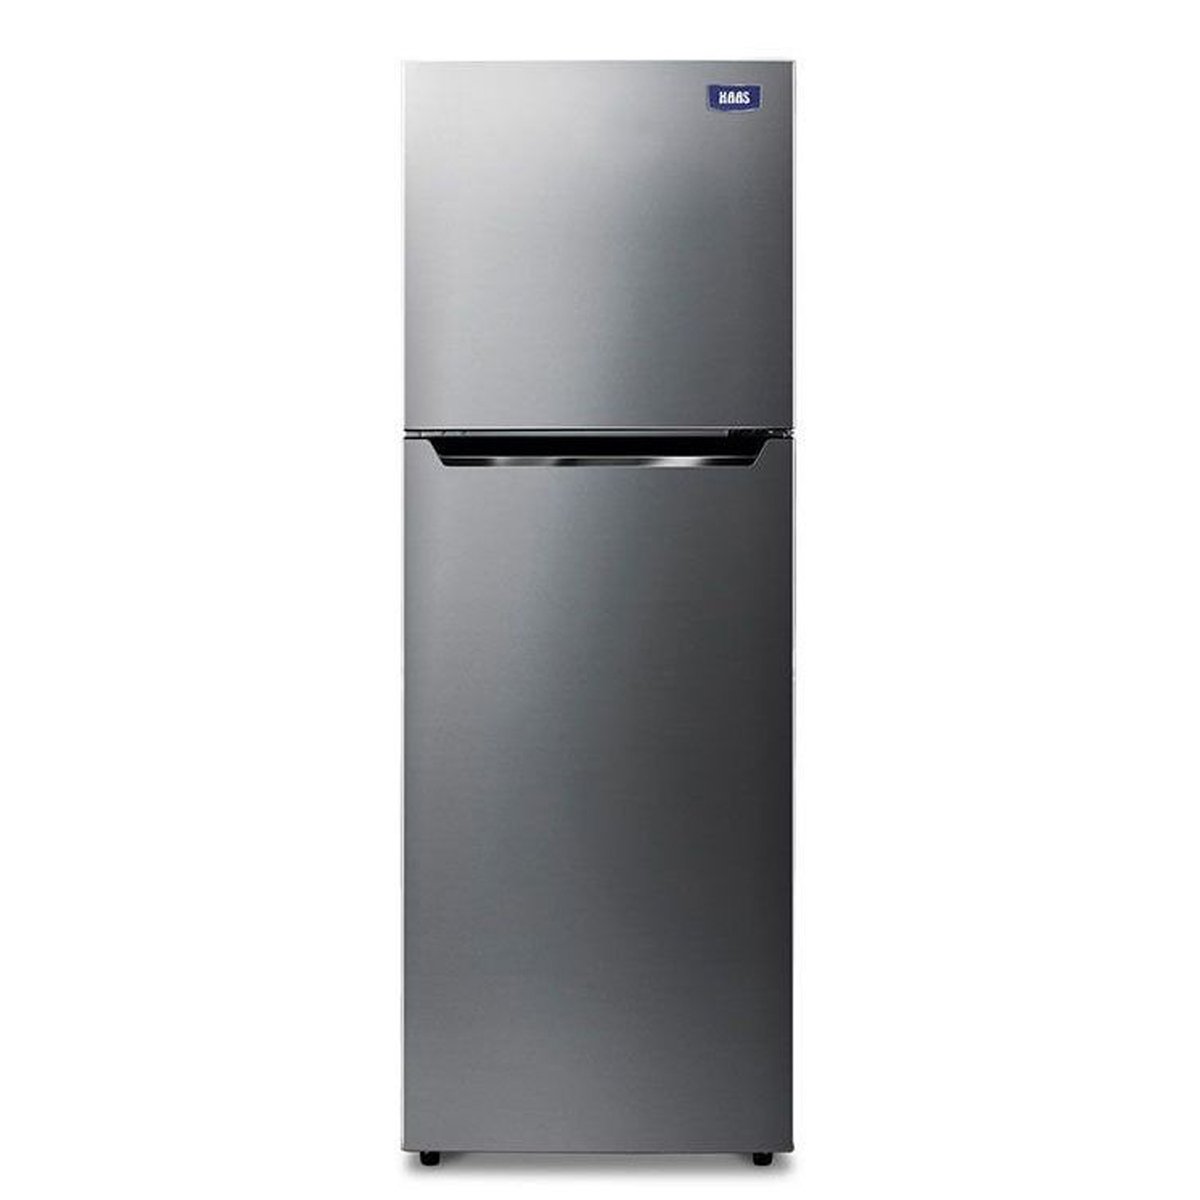 Haas Refrigerator HRK111S 227Ltr